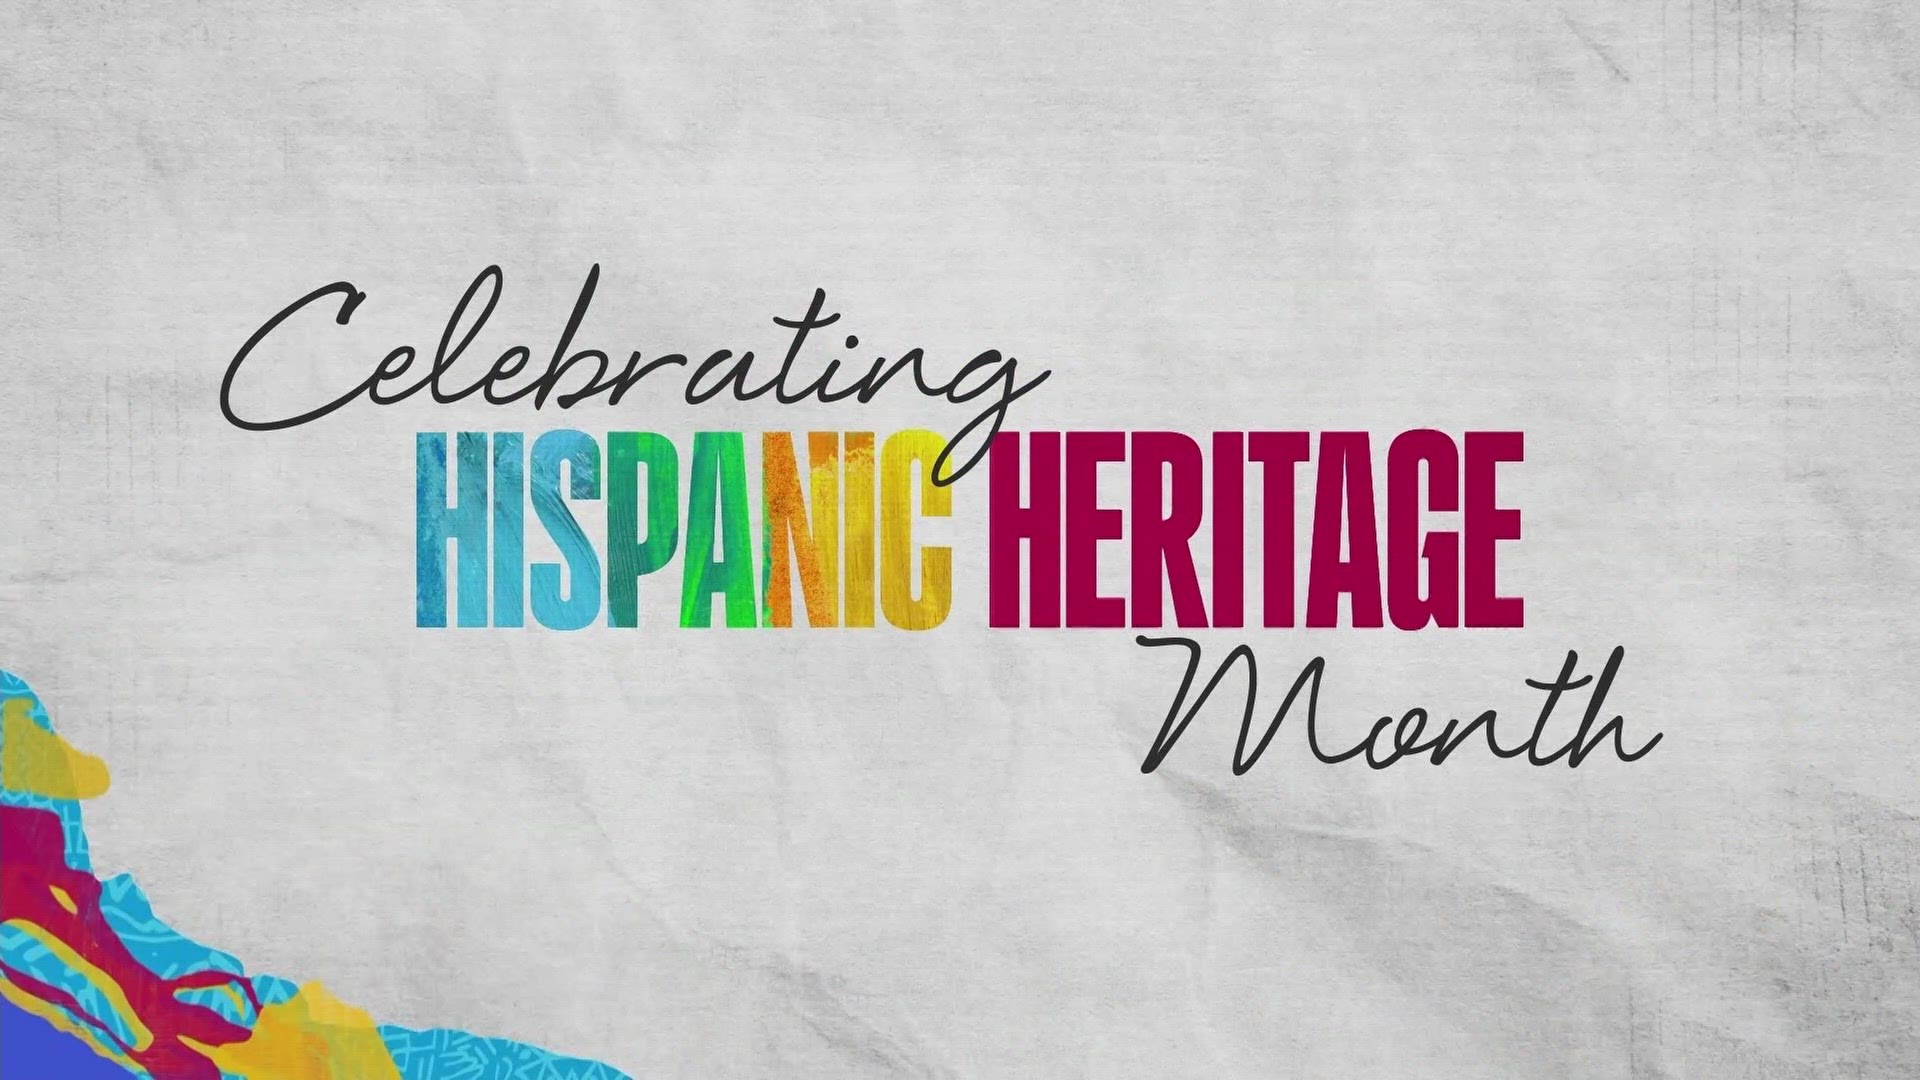 Good Company's Hispanic Heritage Month Spotlight shines on Roberto Clemente